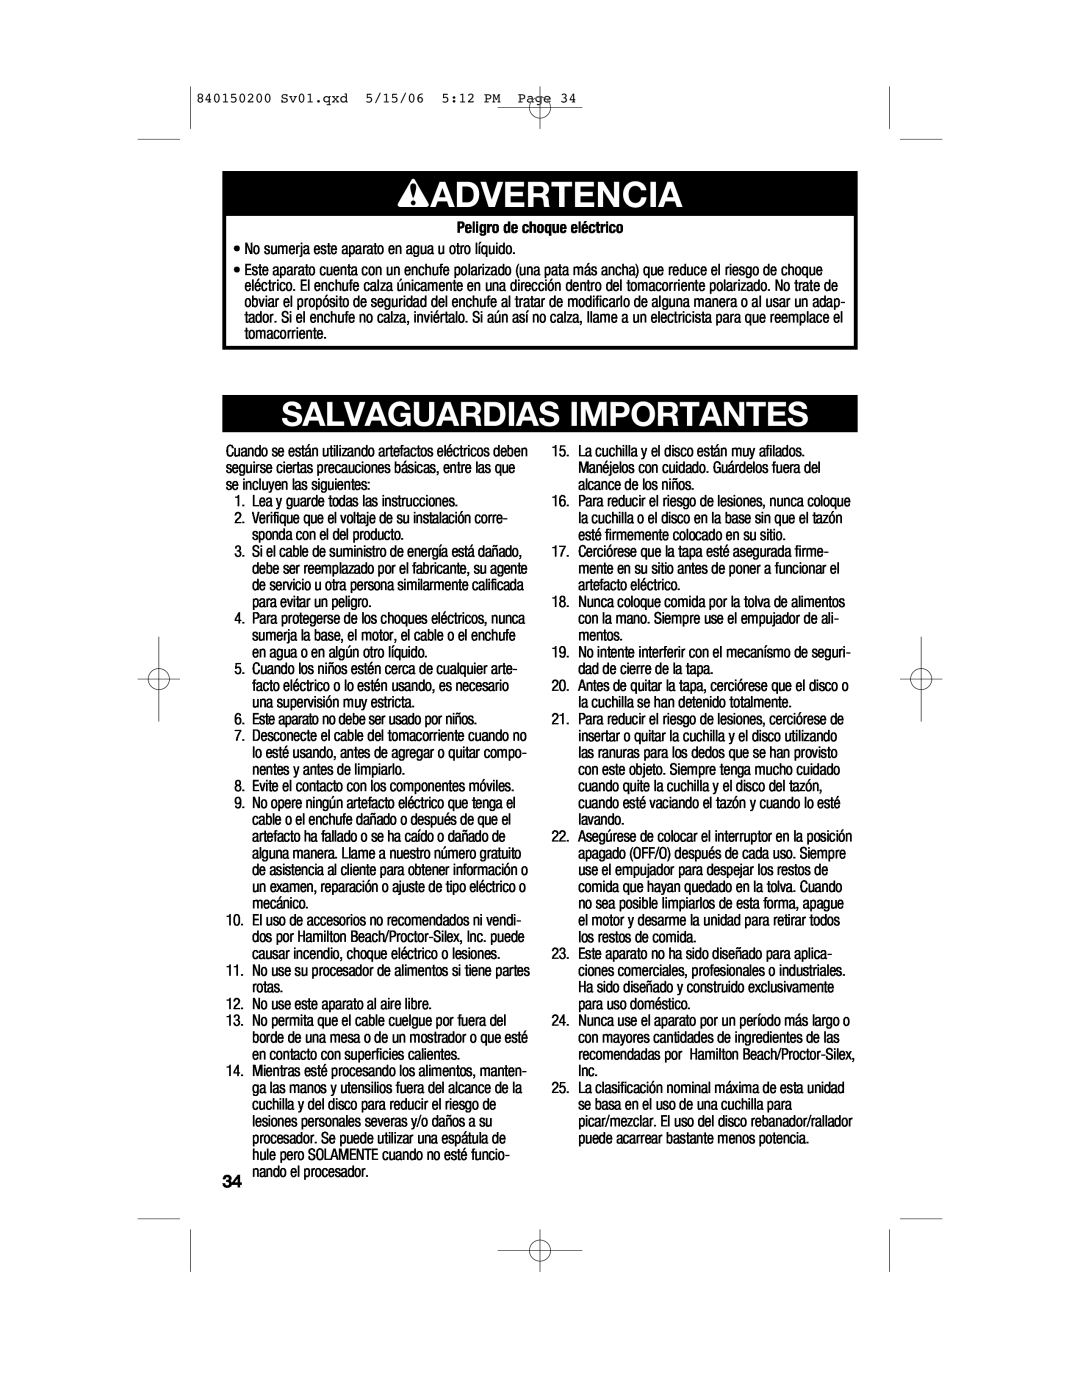 Proctor-Silex 840150200 manual wADVERTENCIA, Salvaguardias Importantes 